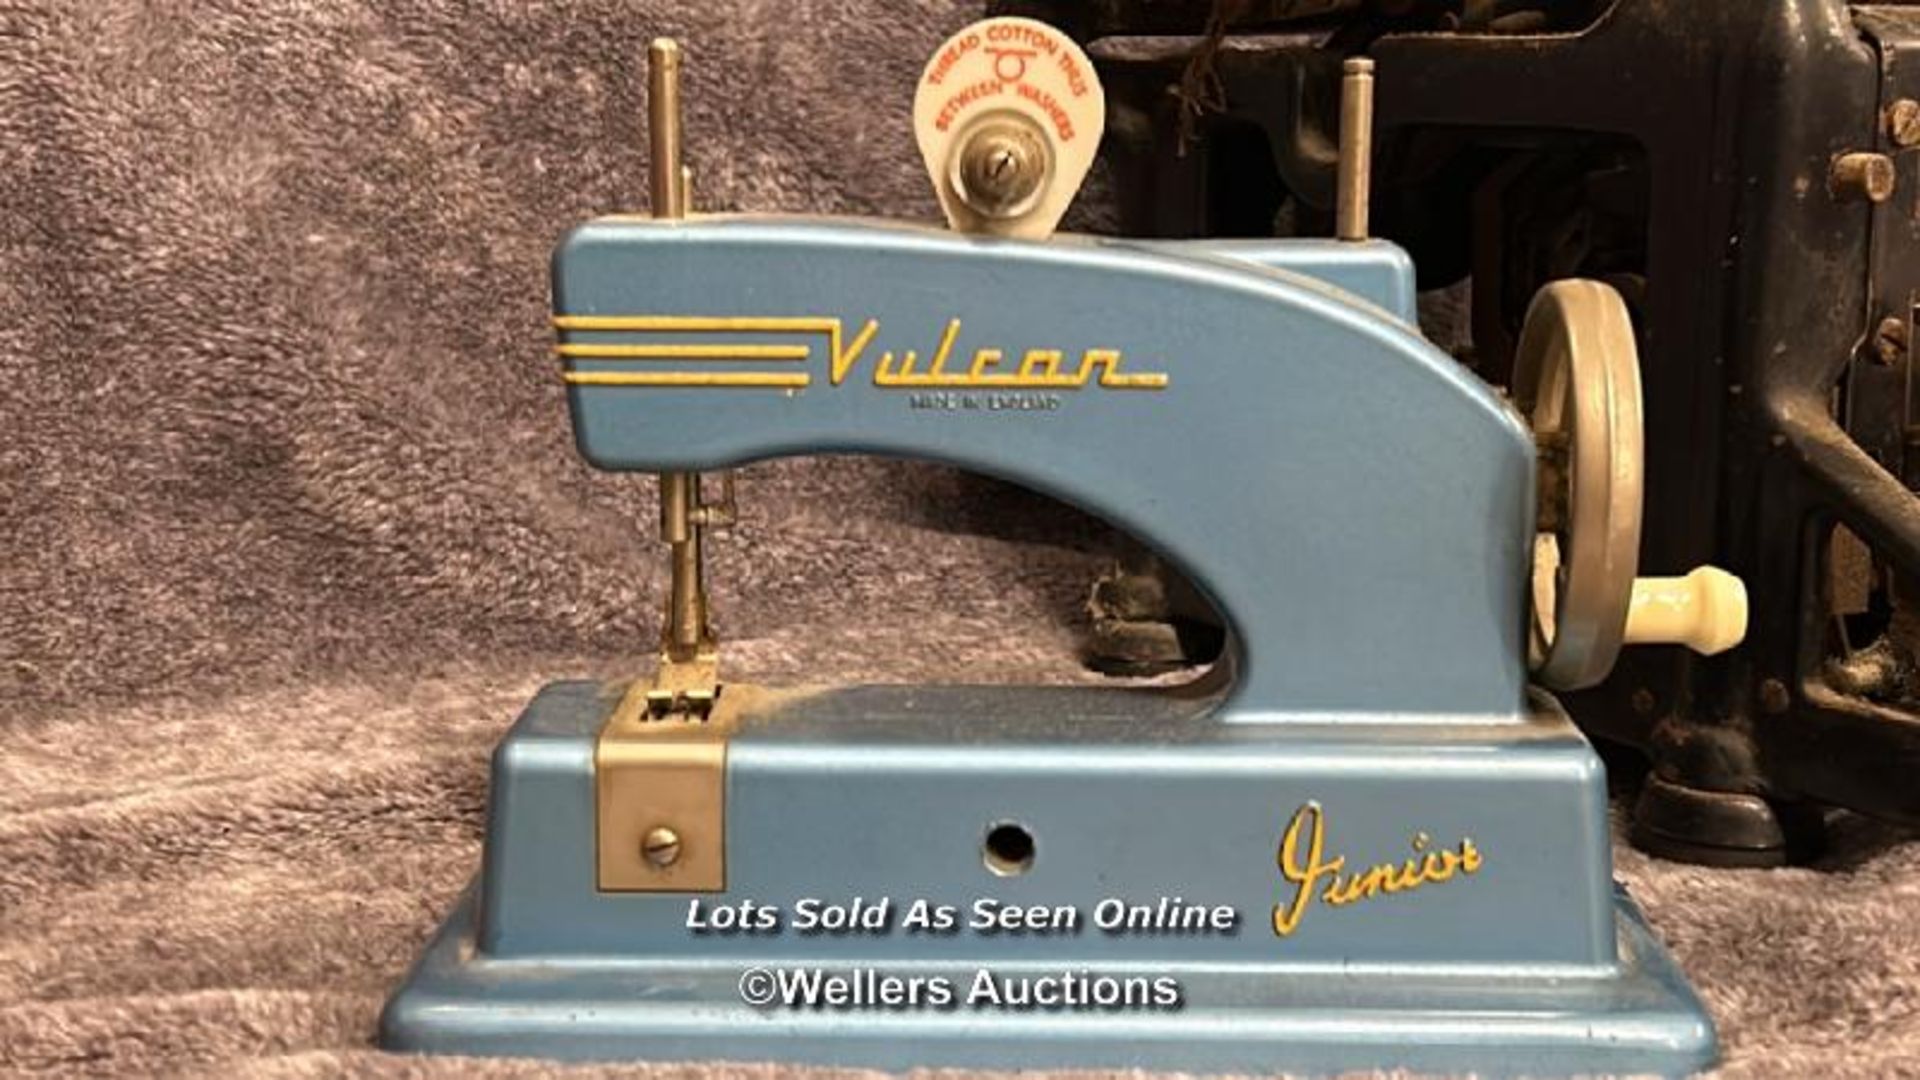 Vintage Underwood typewriter and Vulcan mini sewing machine / AN25 - Image 4 of 4